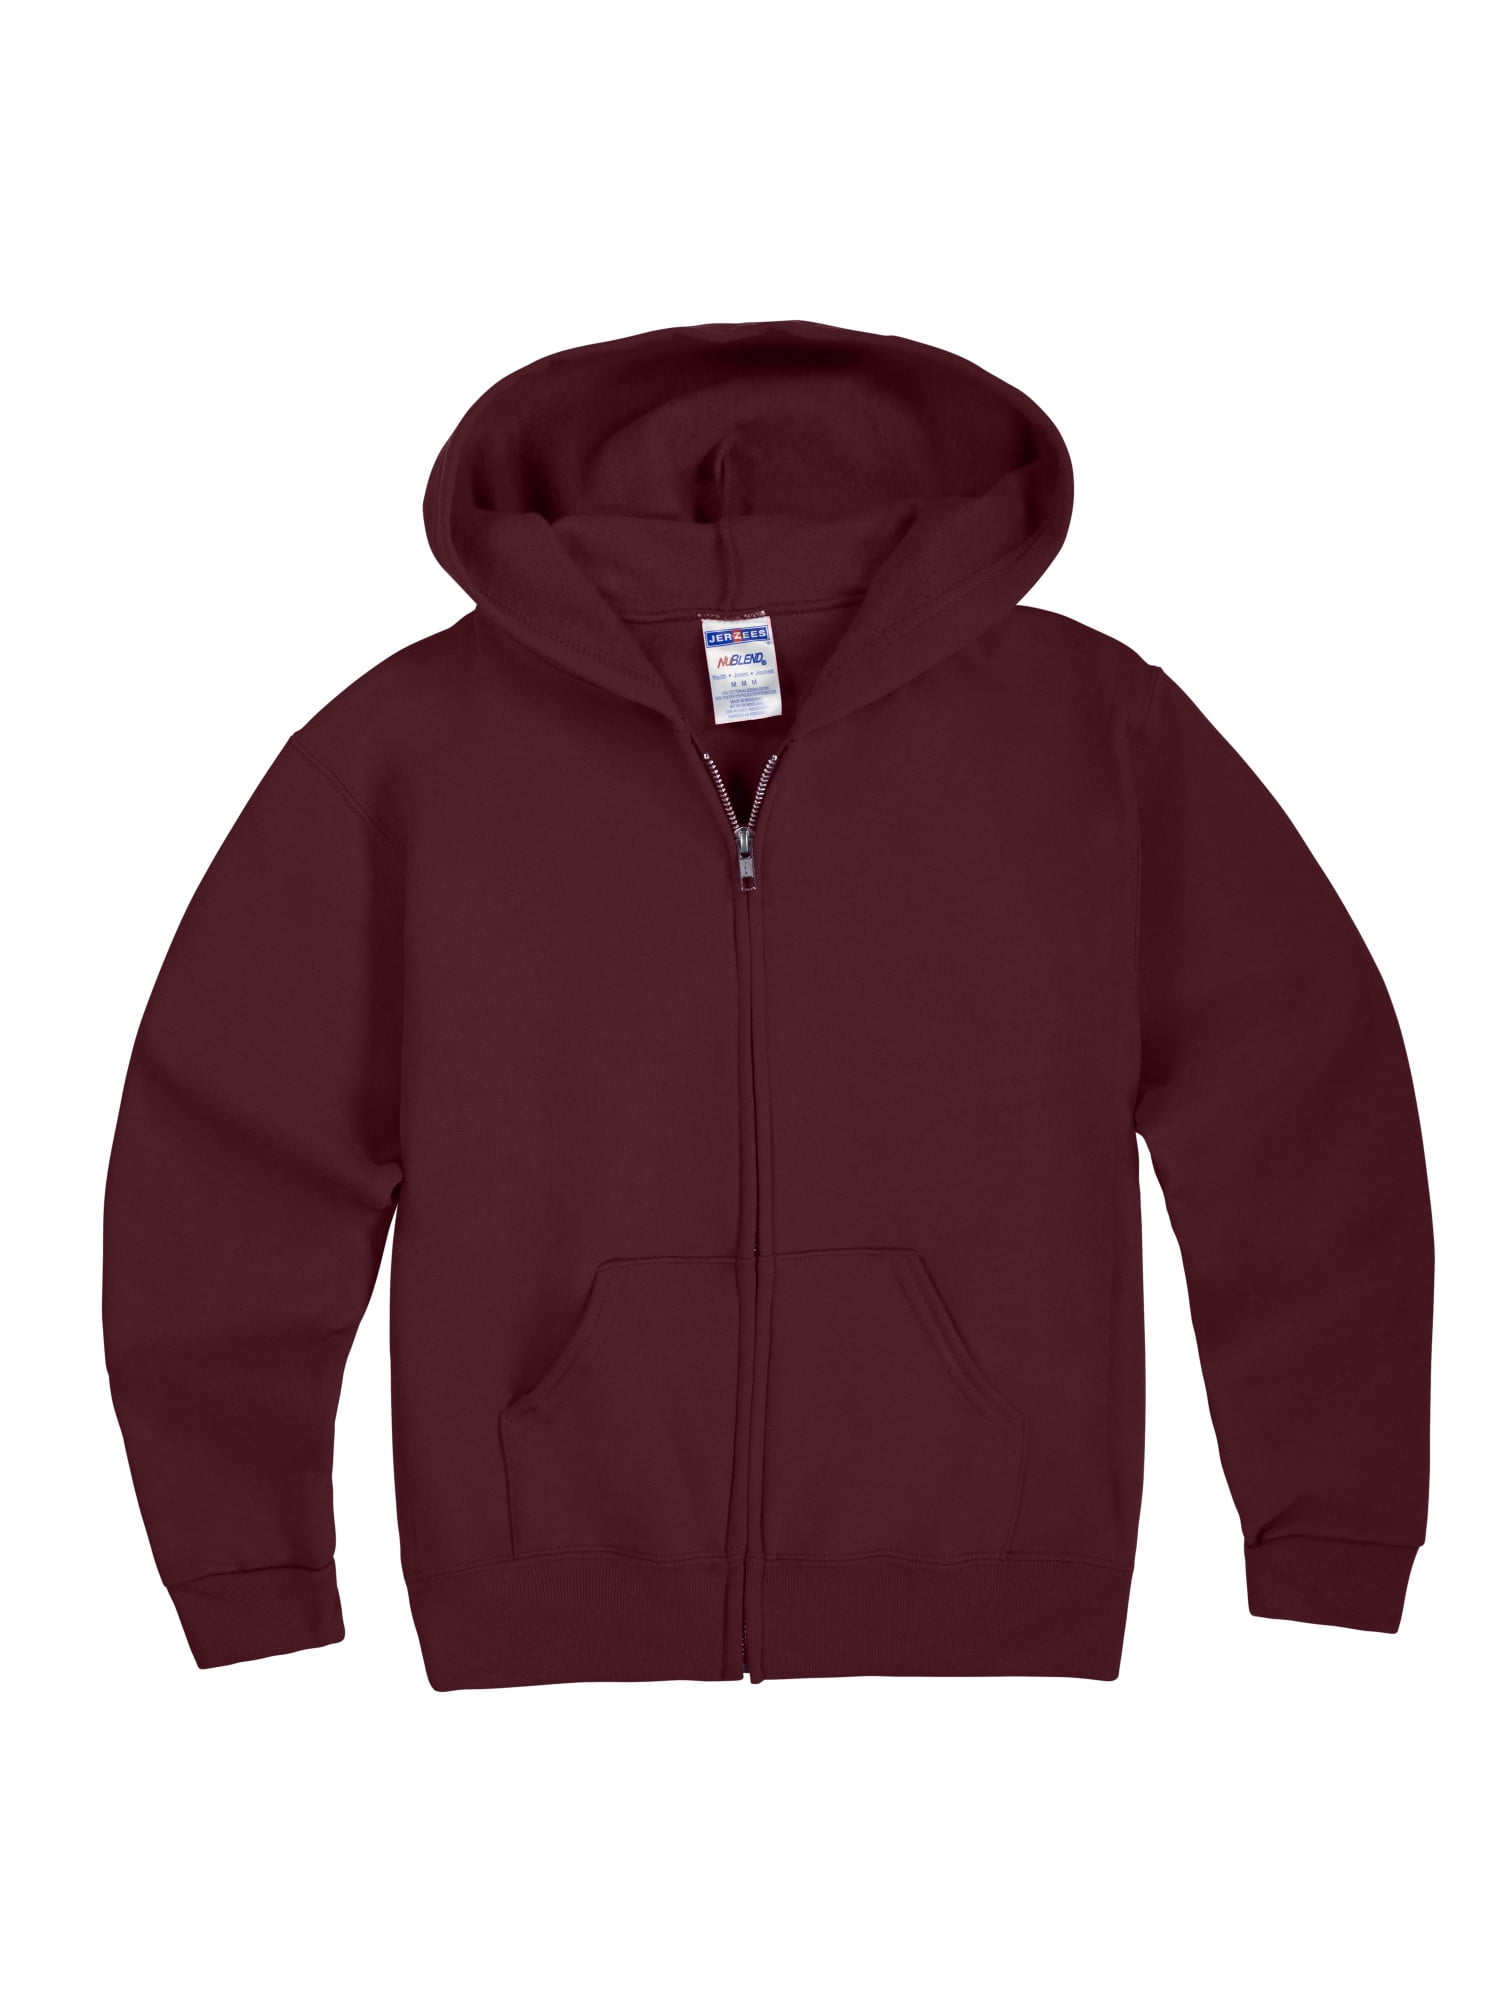 show original title Details about   Boys jacket/sweat jacket sweatshirt with zipper & hood 128-152 